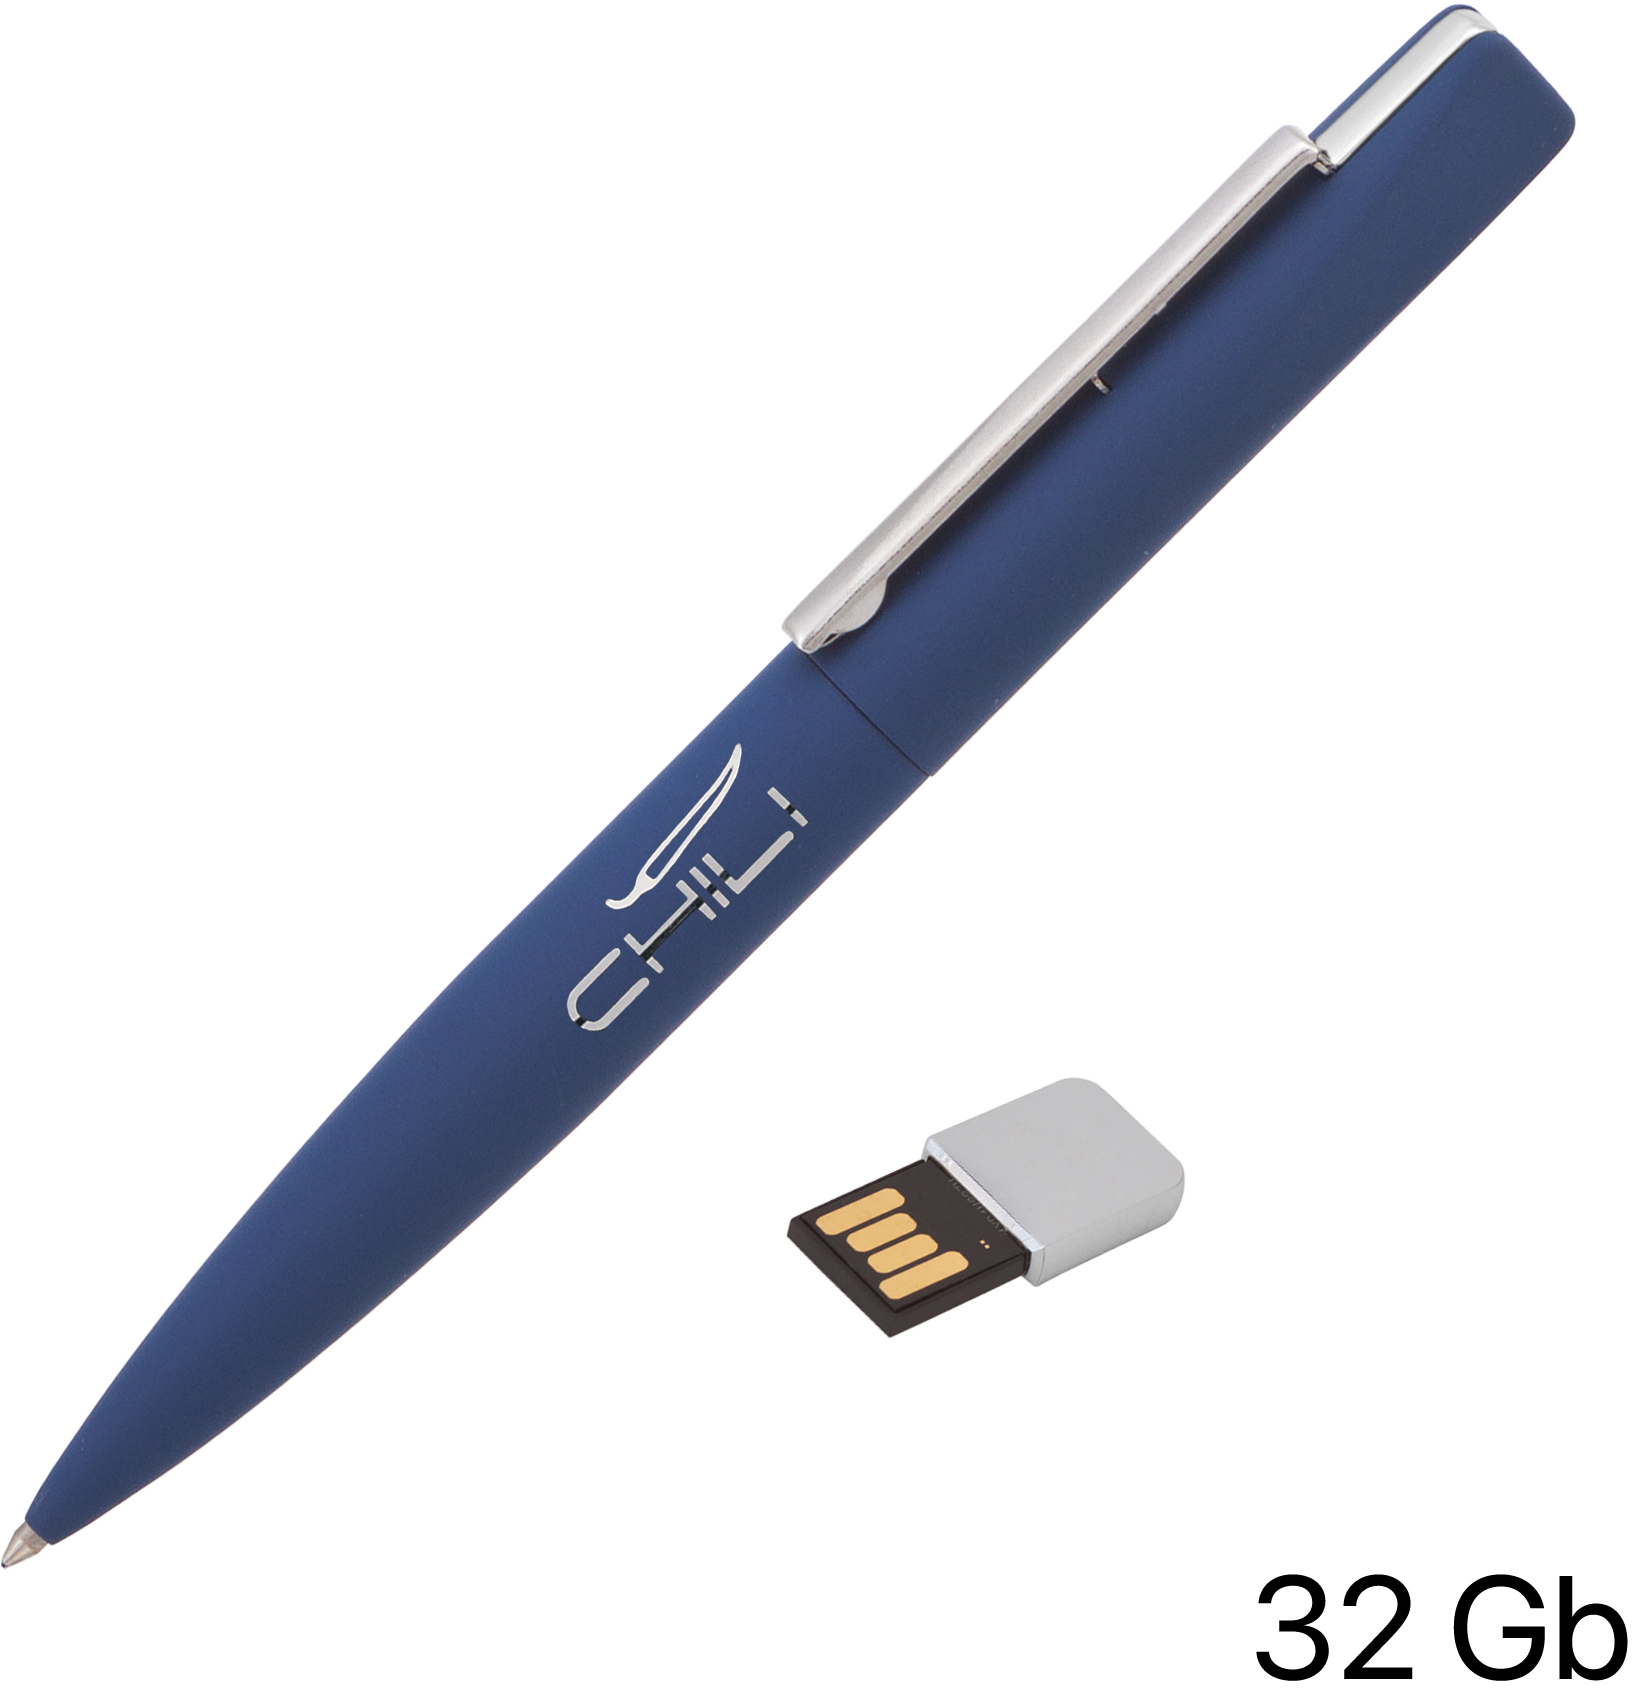 Артикул: E6828-21S/32Gb — Ручка шариковая "Callisto" с флеш-картой 32Gb, покрытие soft touch